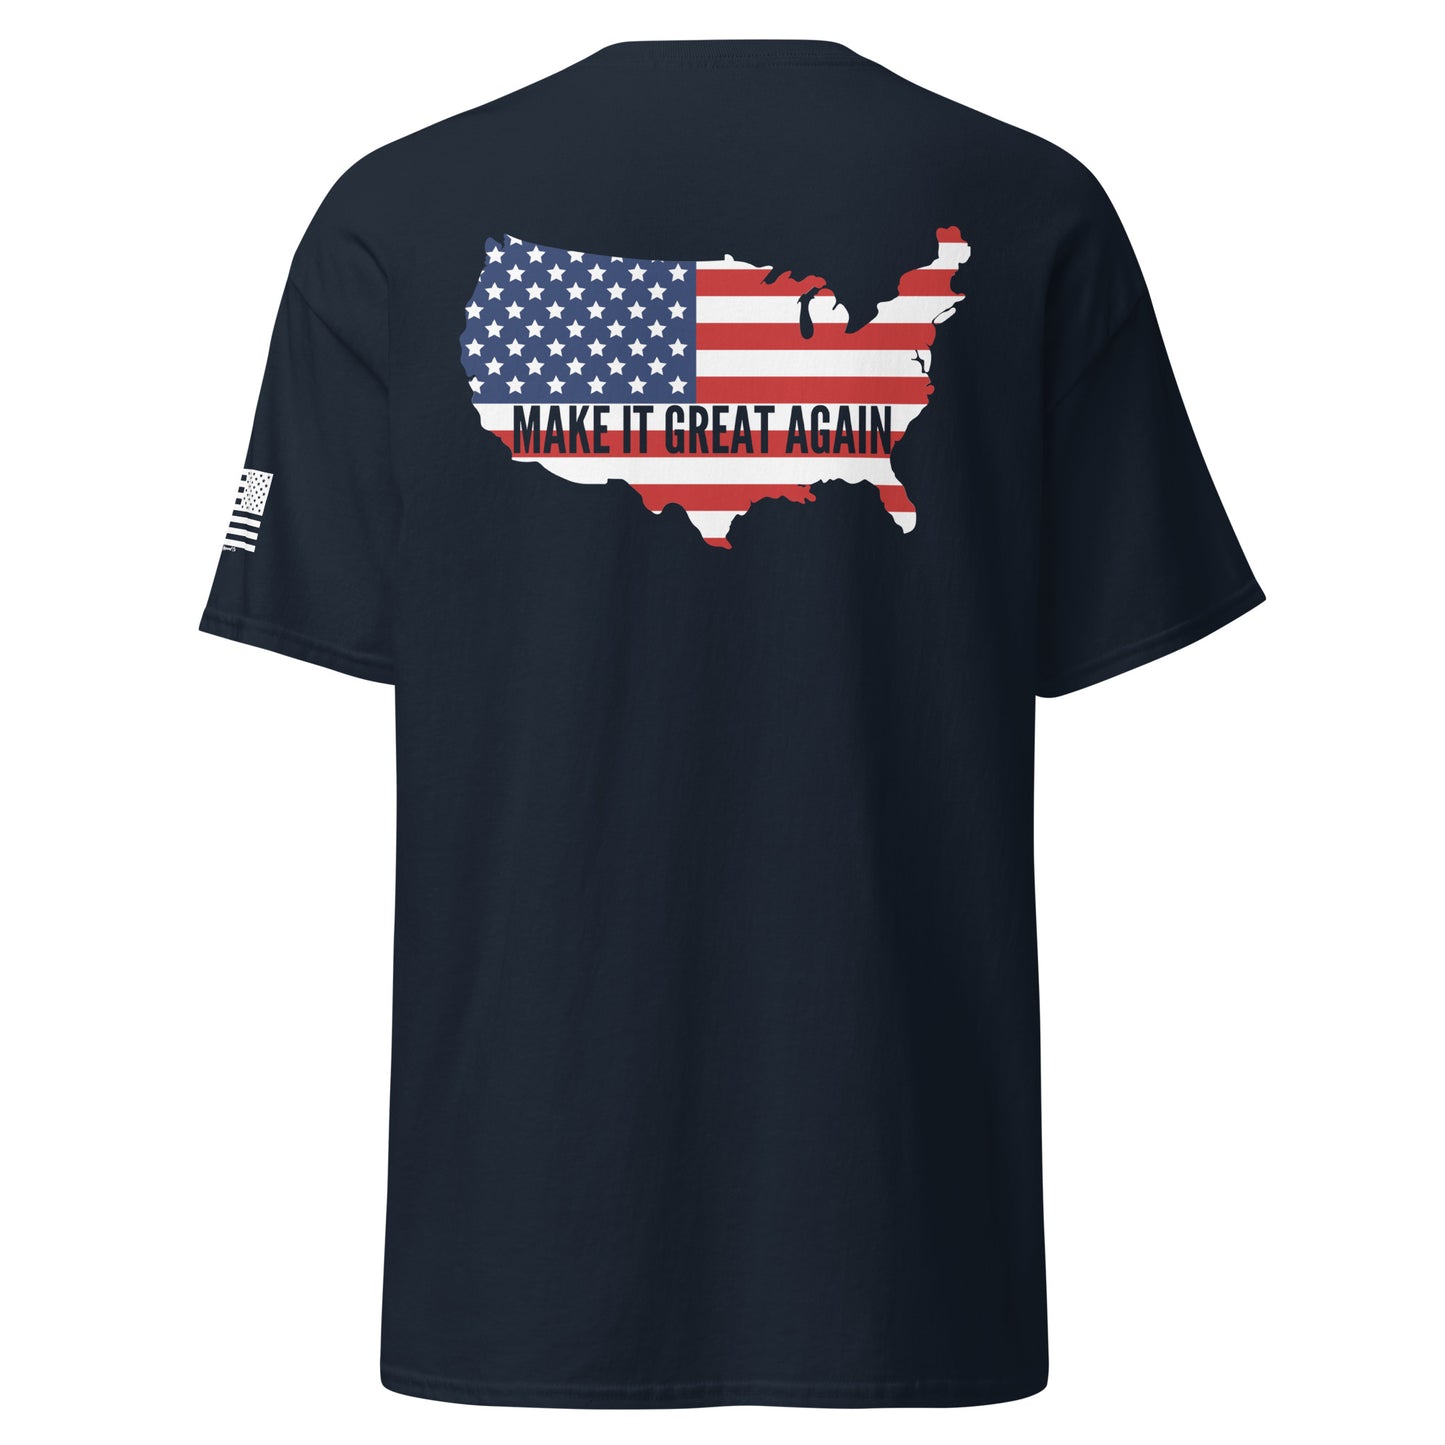 "Make it Great Again America" T-Shirt